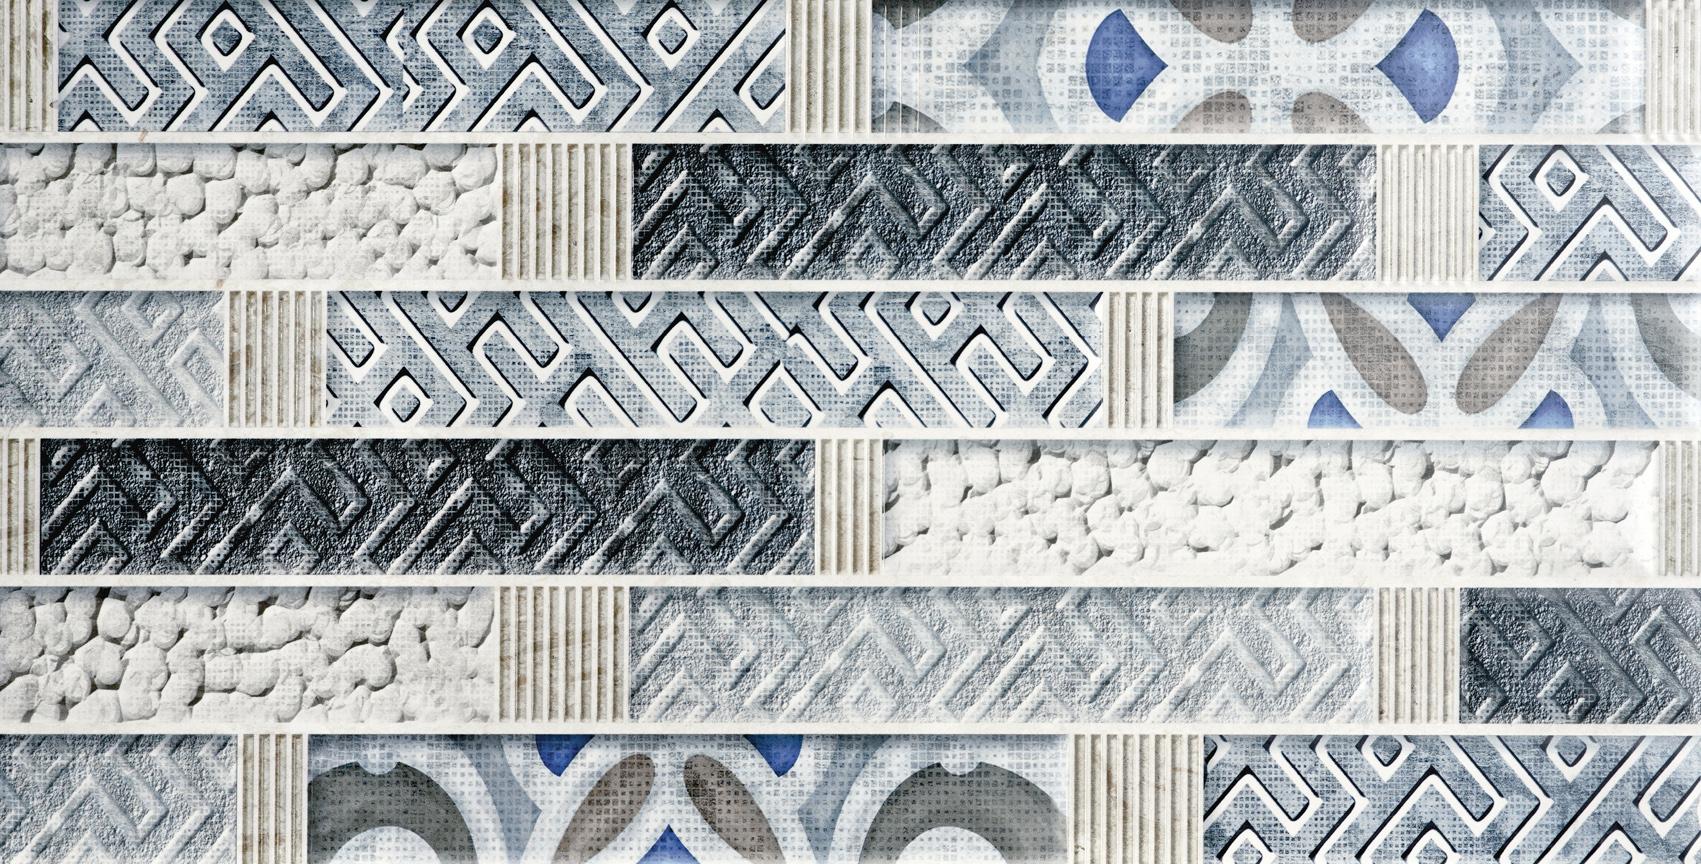 Ceramic Tiles for Bathroom Tiles, Kitchen Tiles, Accent Tiles